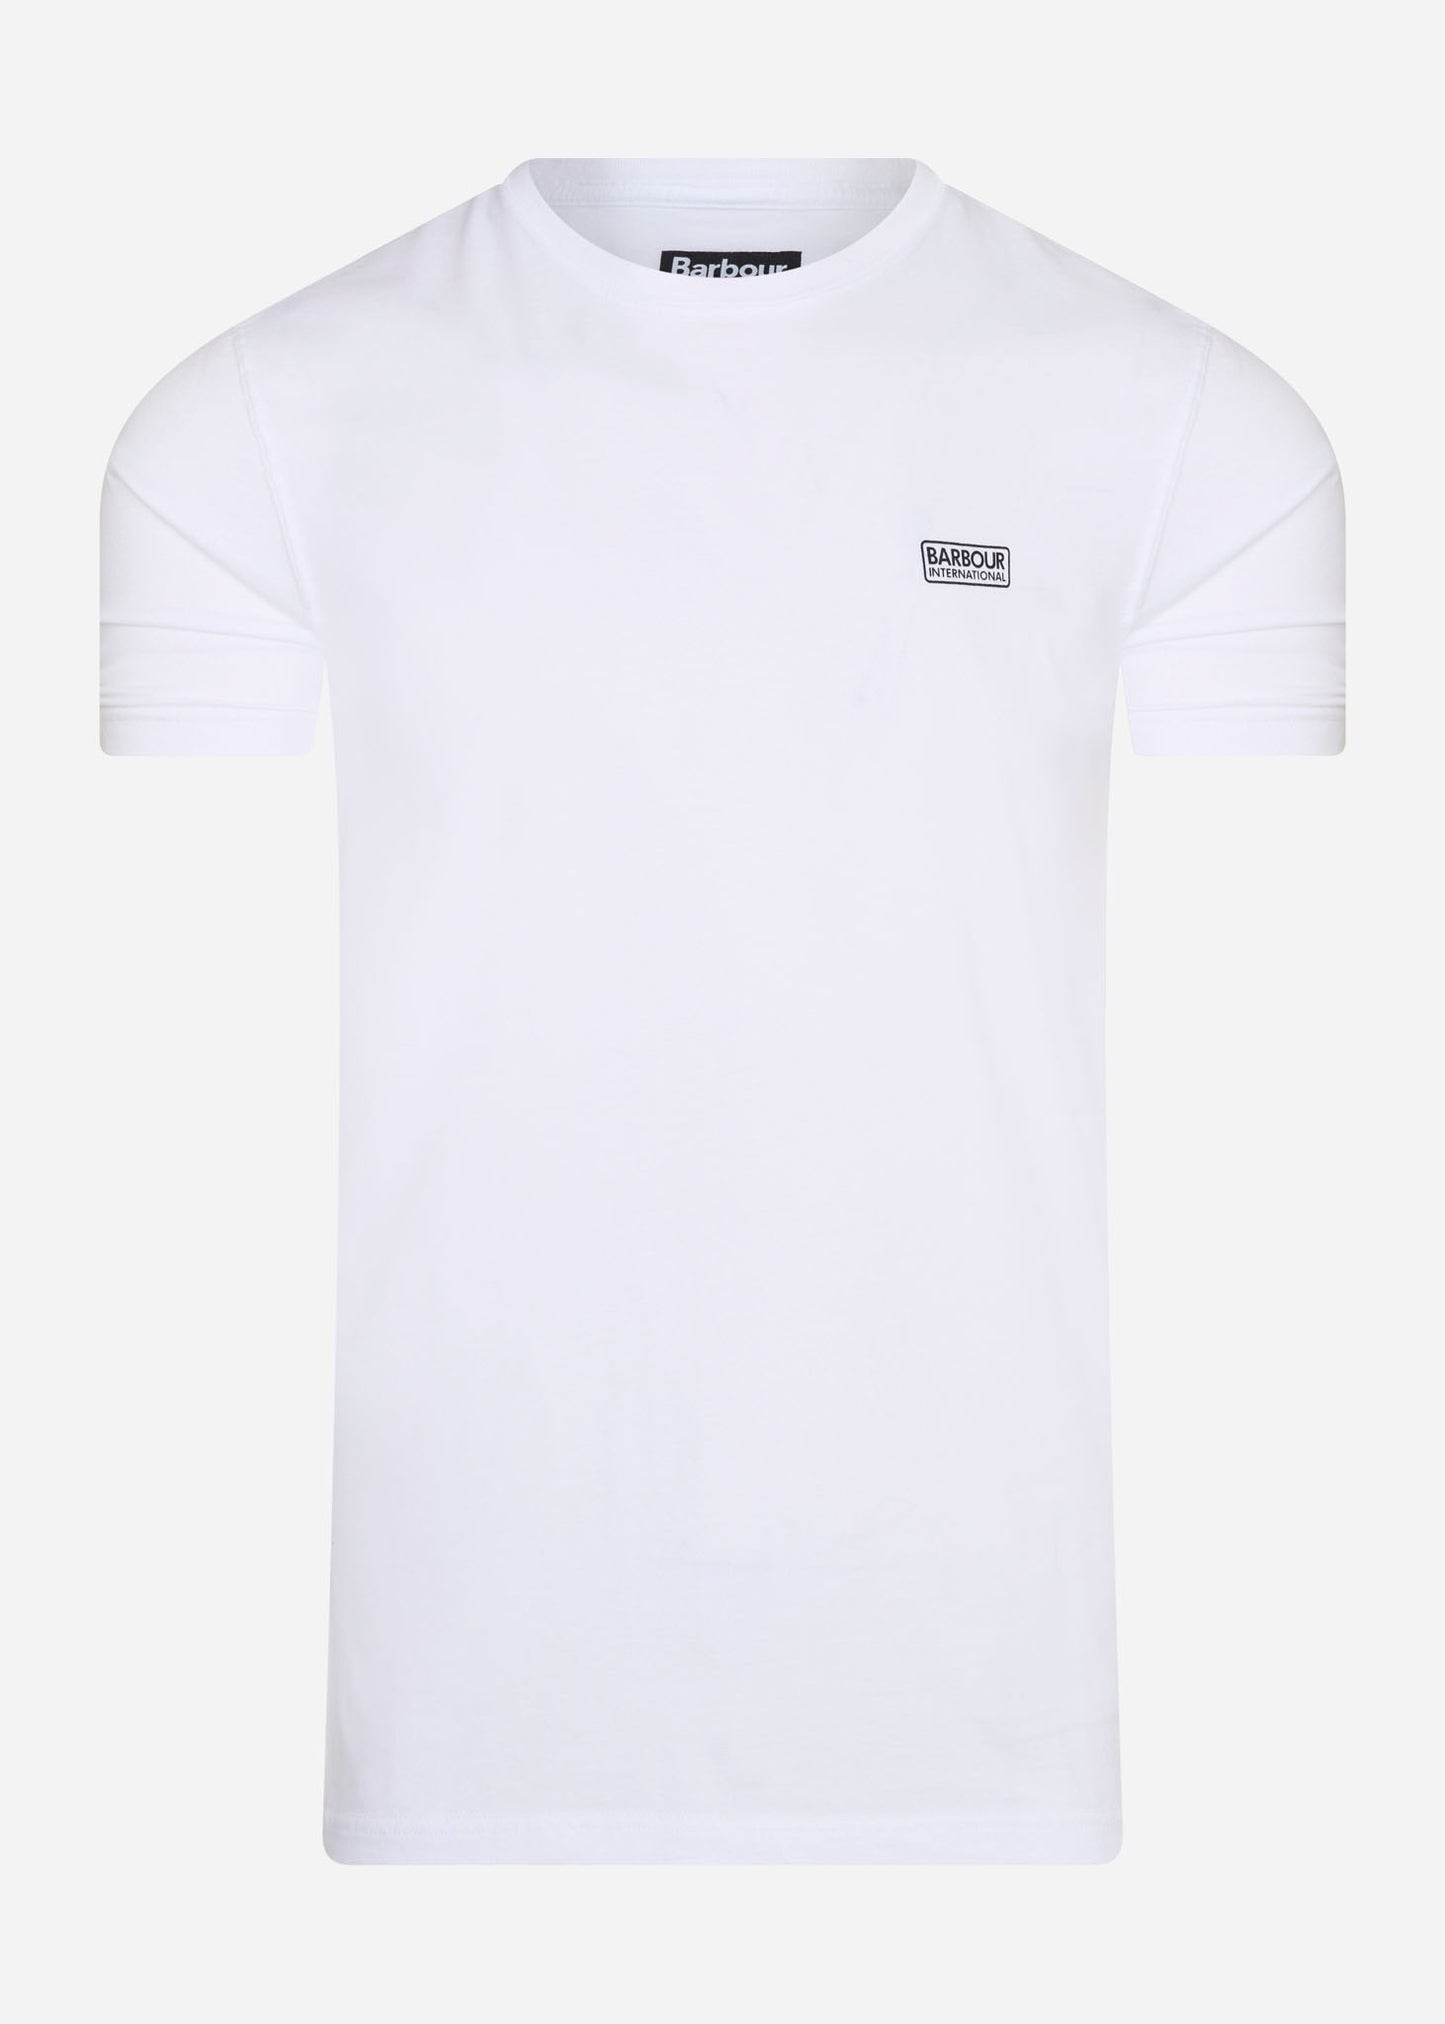 barbour international t-shirt wit